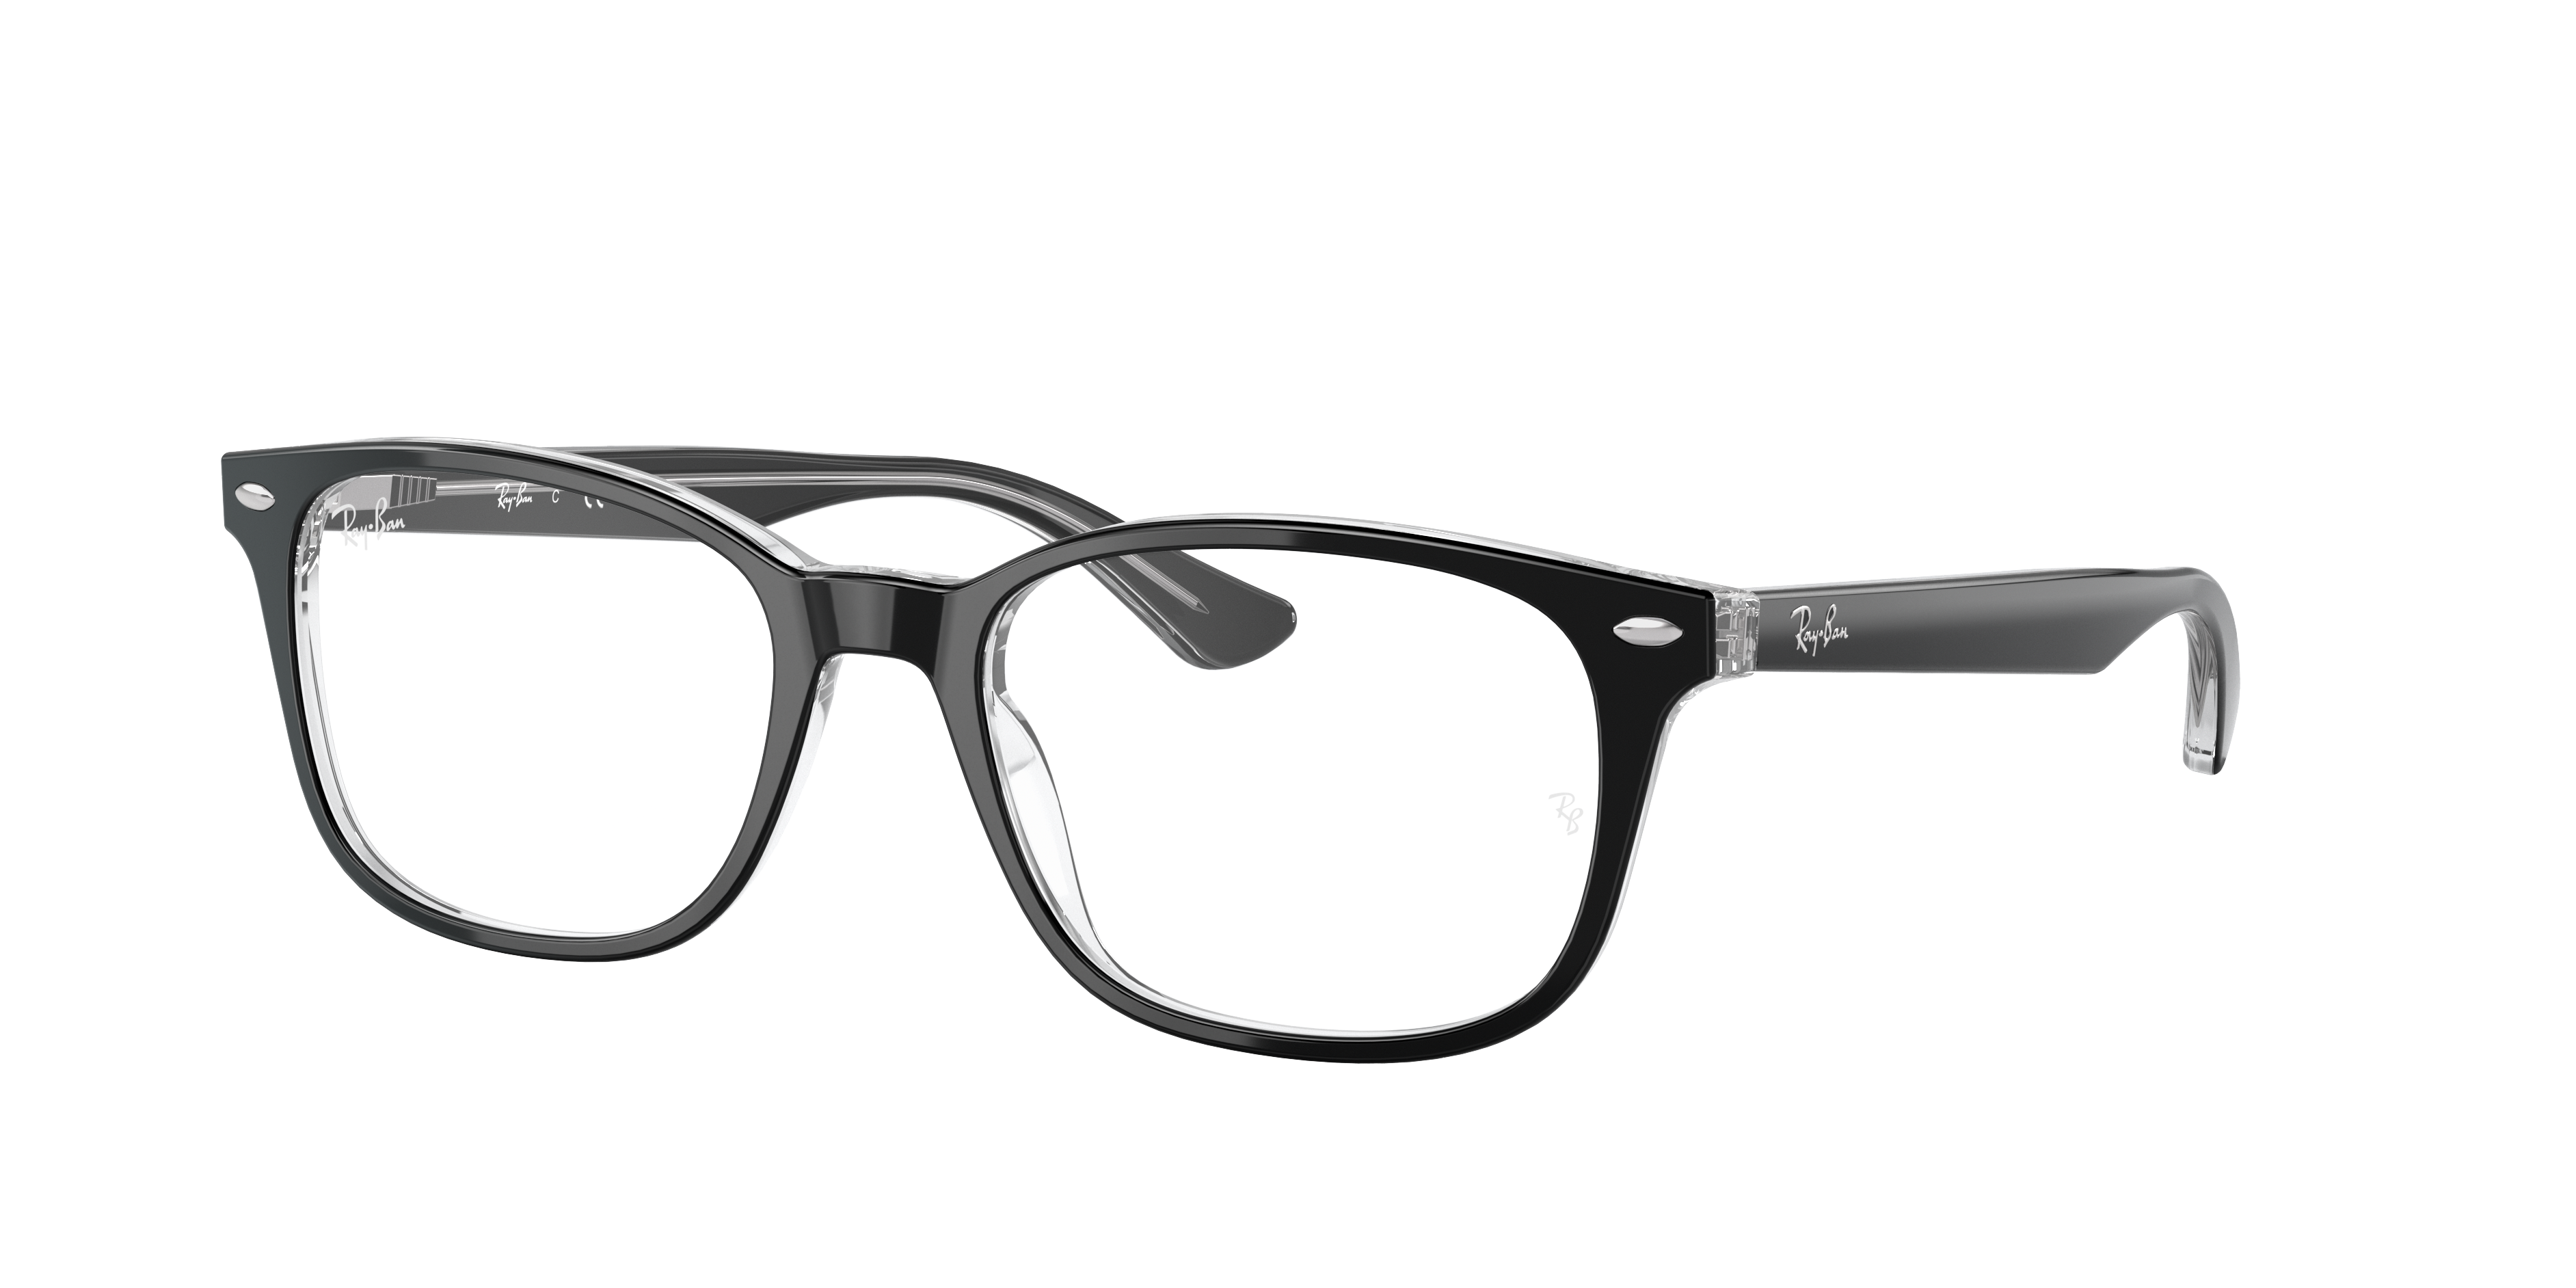 Rb5375 Optics Eyeglasses with Black On Transparent Frame | Ray-Ban®